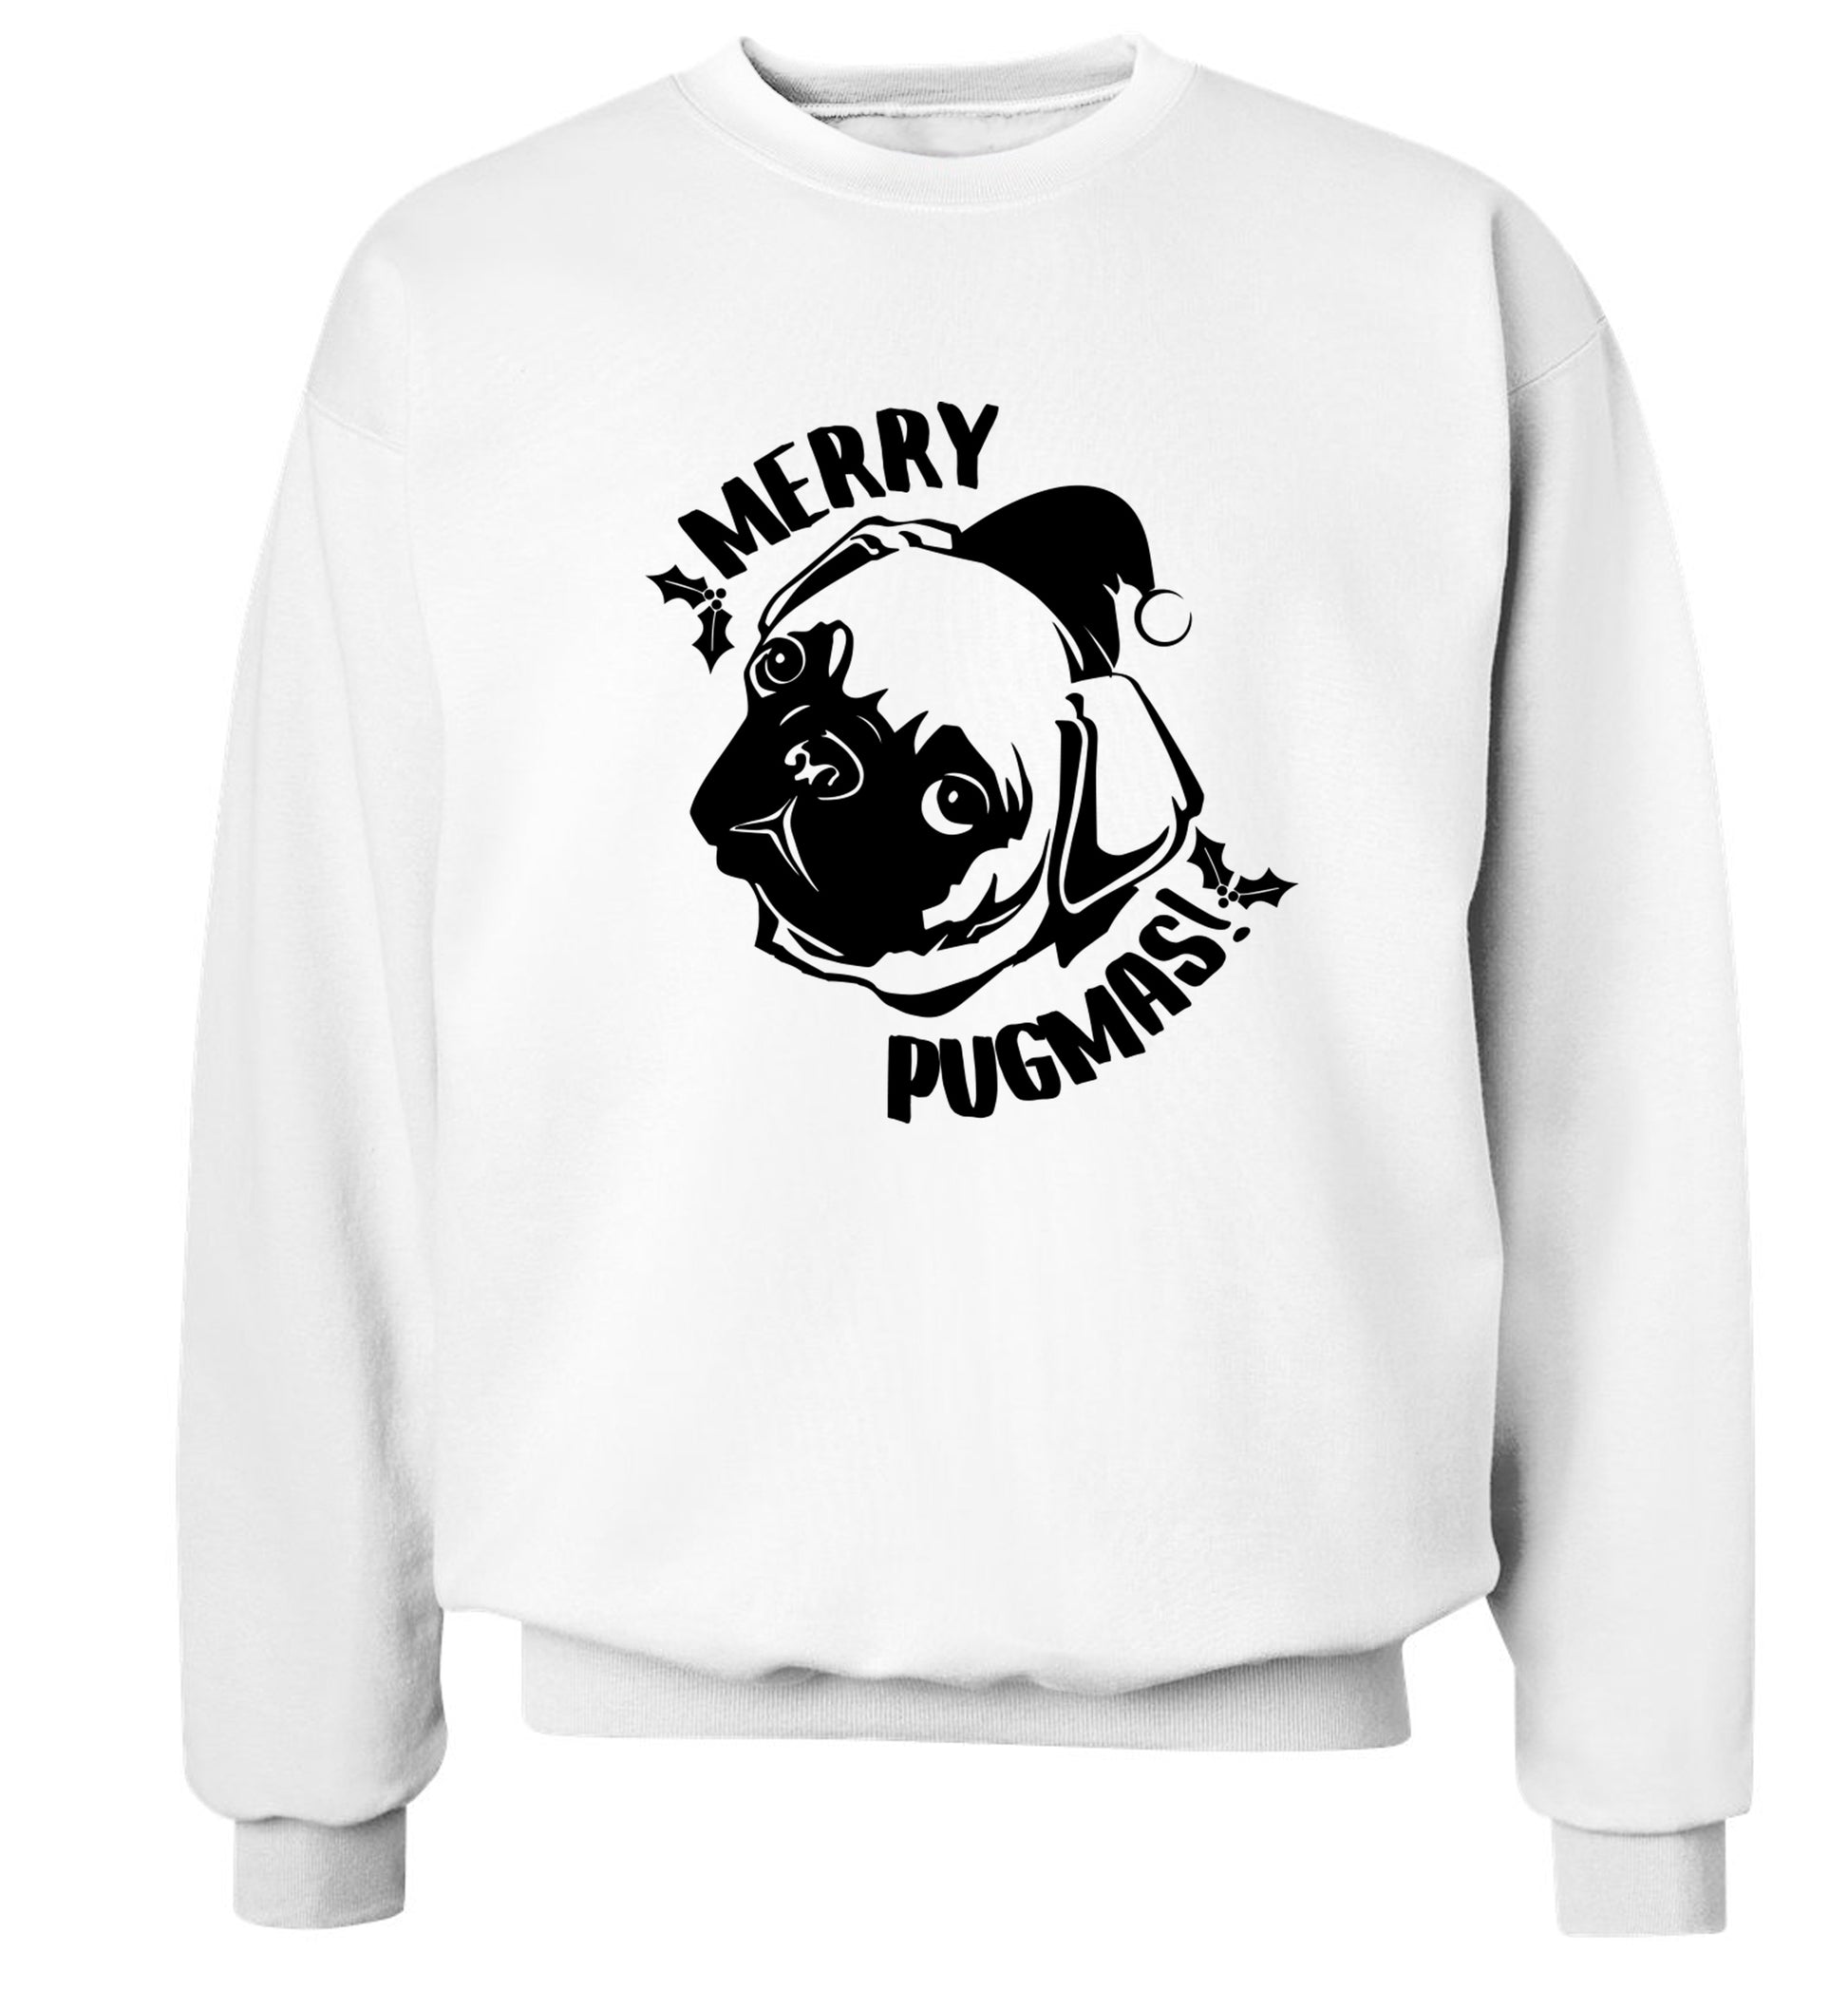 Merry Pugmas Adult's unisex white Sweater 2XL